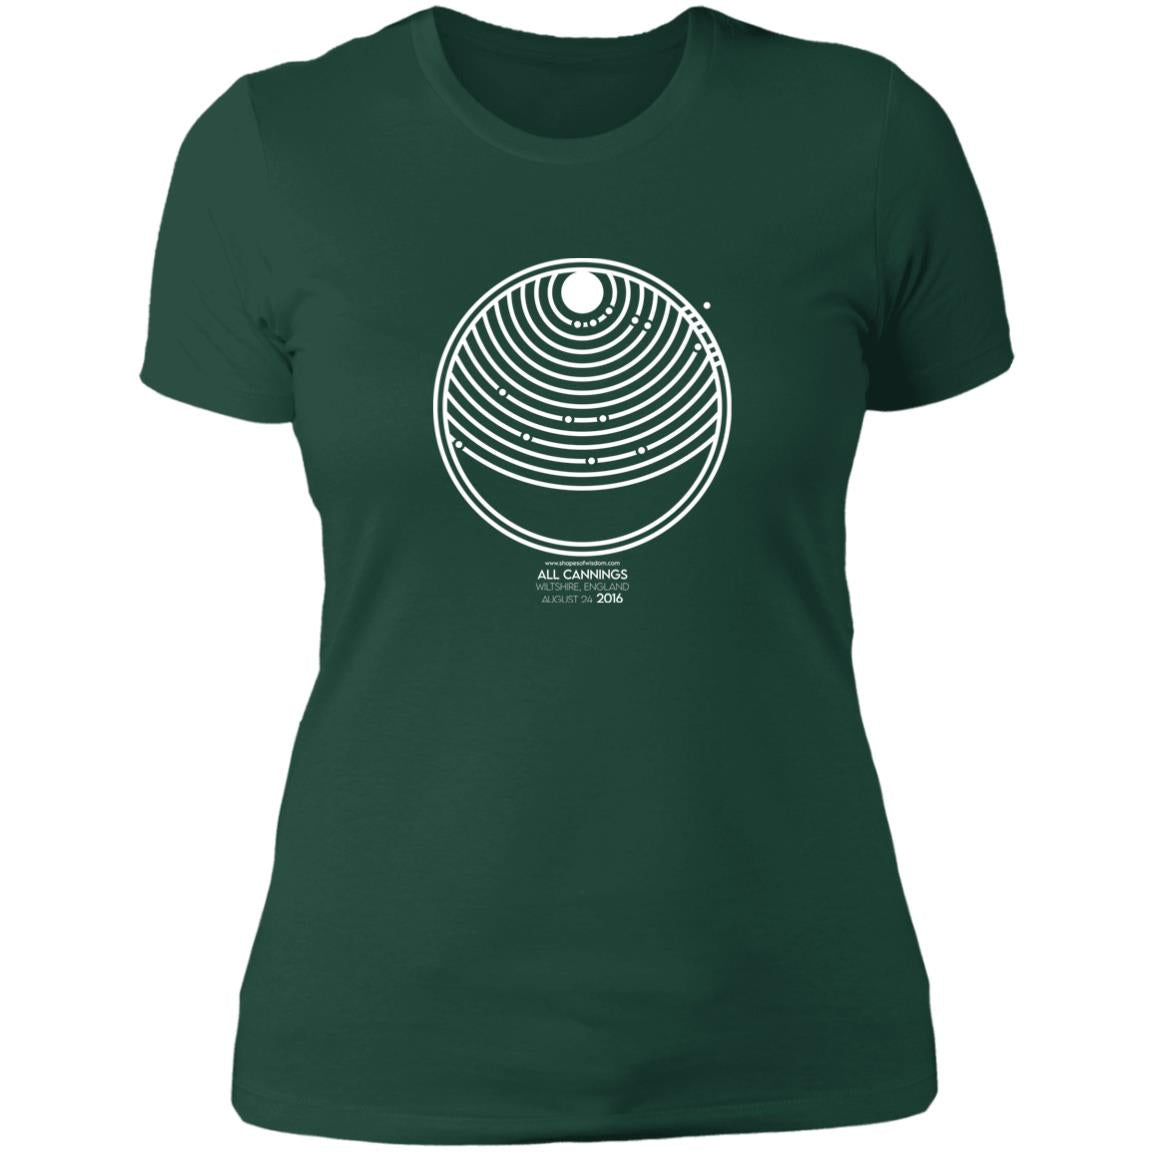 Crop Circle Basic T-Shirt - All Cannings 5